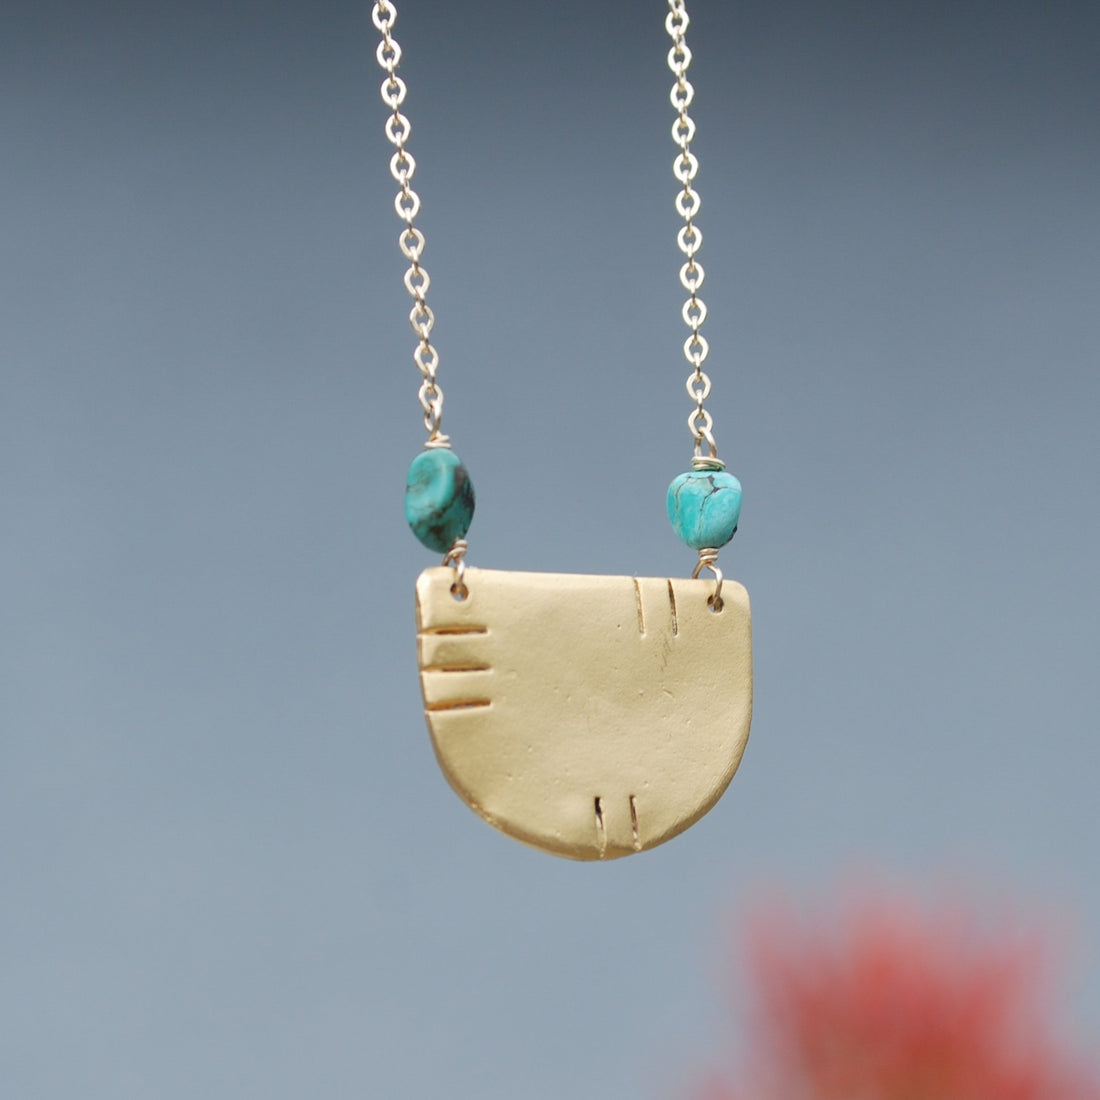 Elan - Halfmoon Necklace with Turquoise Stones